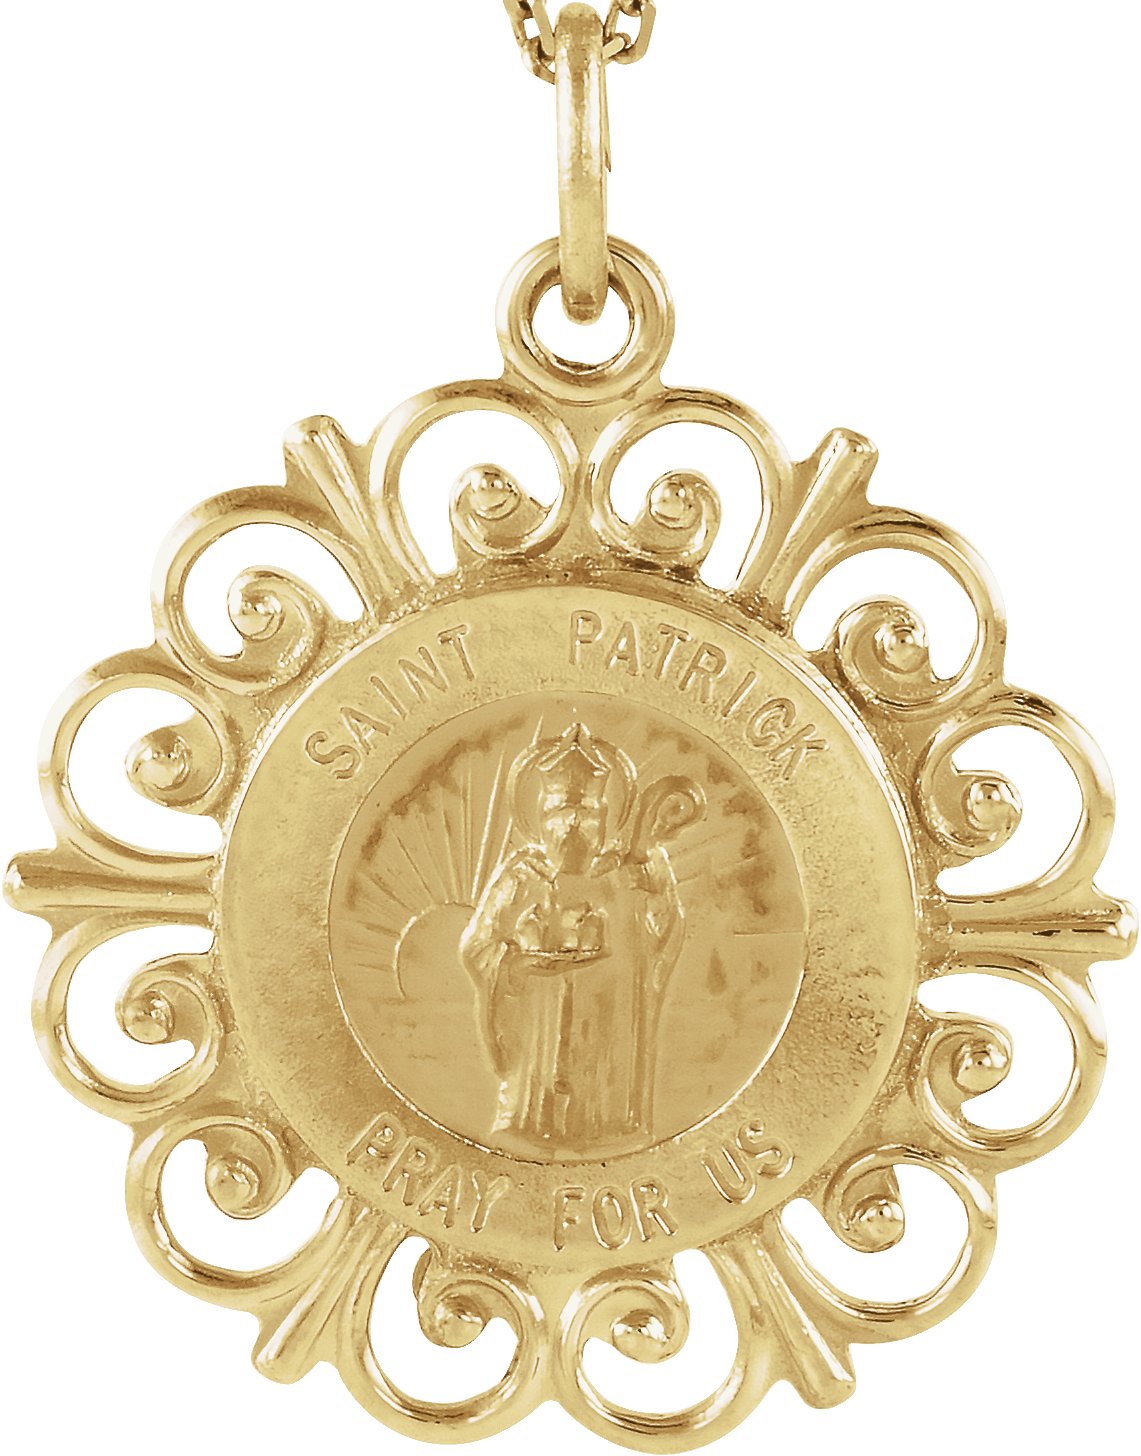 St. Patrick Medal 18.5mm Ref 882493